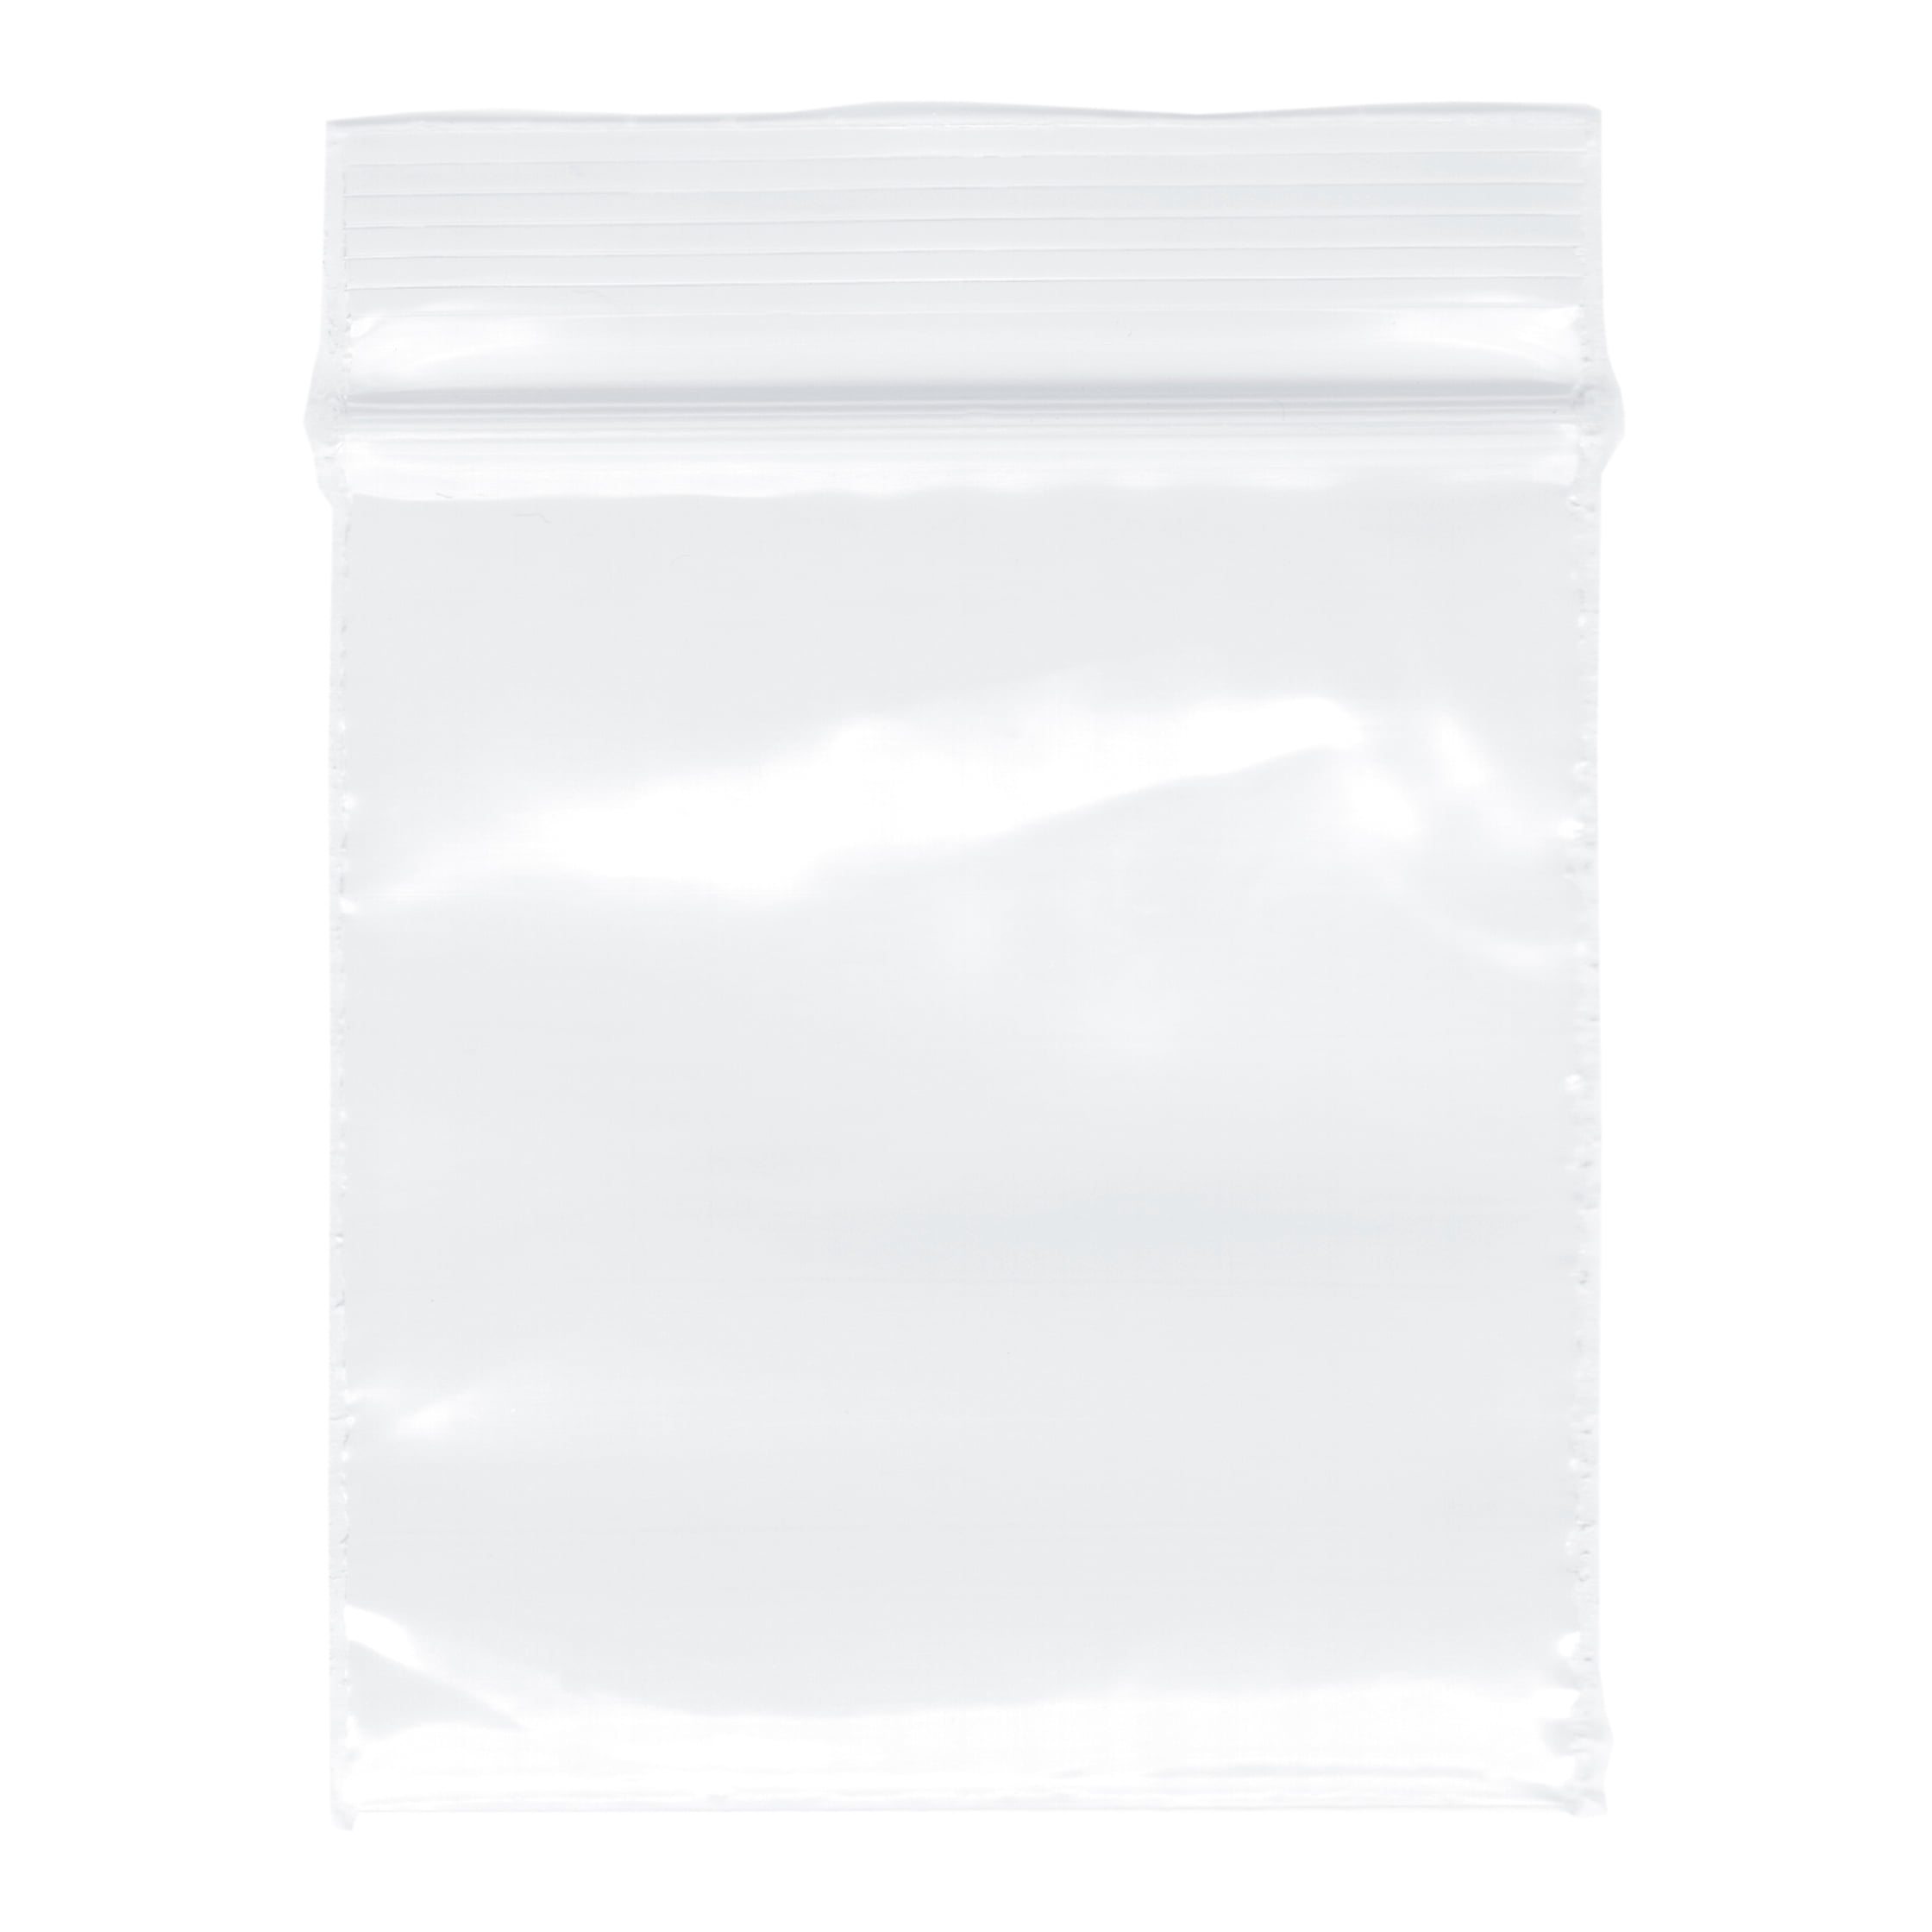 Plymor Zipper Reclosable Plastic Bags 1.5 x 1.5 Case of 1000 2 Mil 